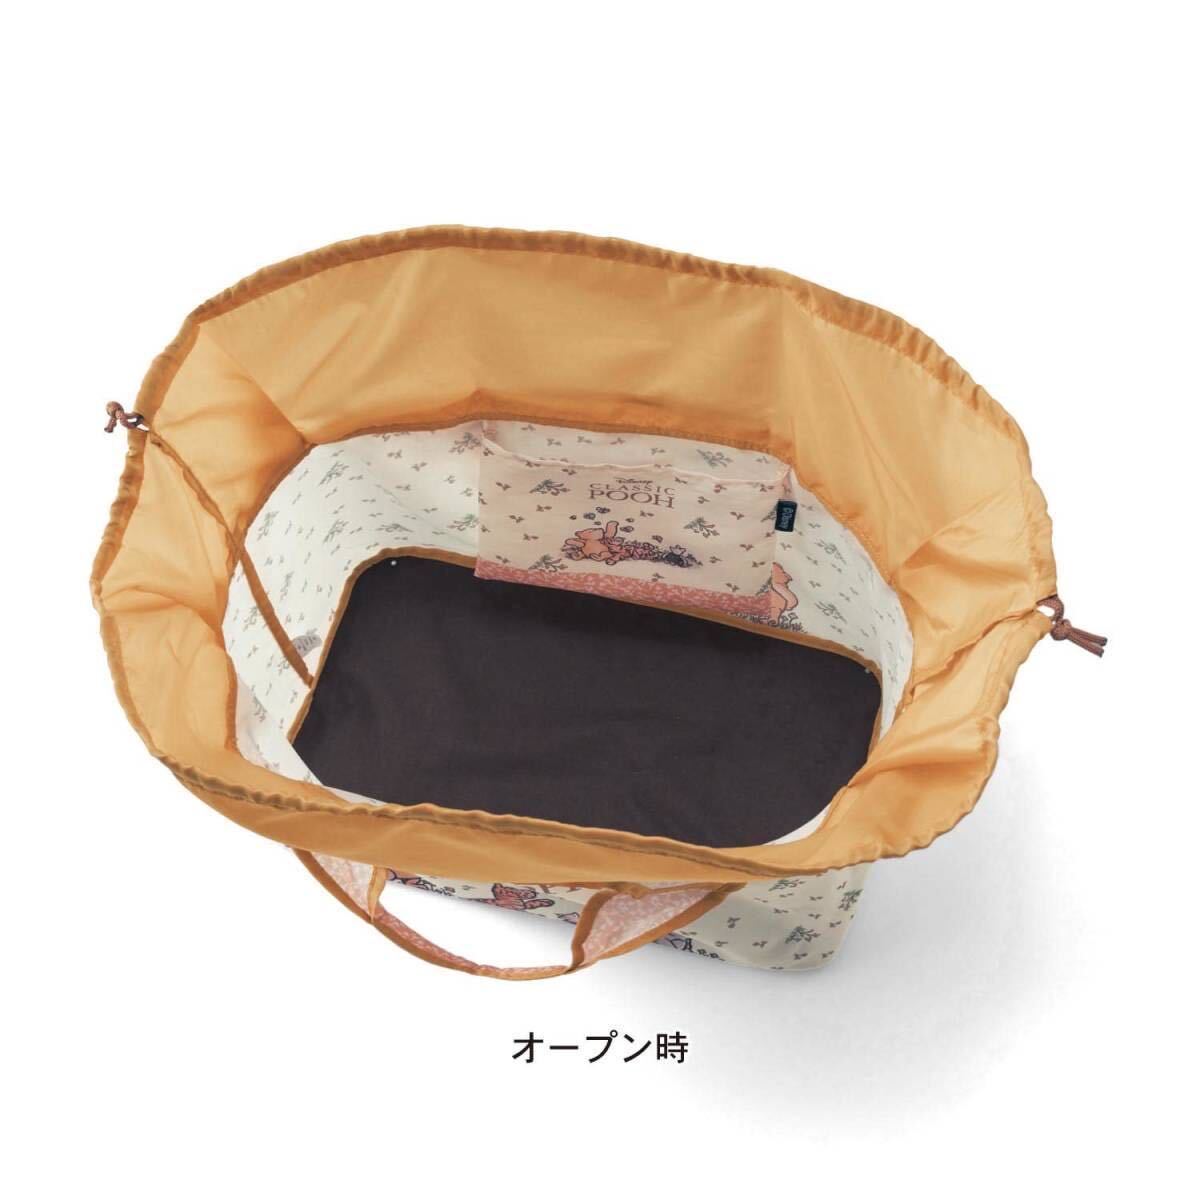  Disney Винни Пух reji корзина сумка (f линзы ) эко-сумка покупка сумка reji корзина для сумка Classic Pooh 